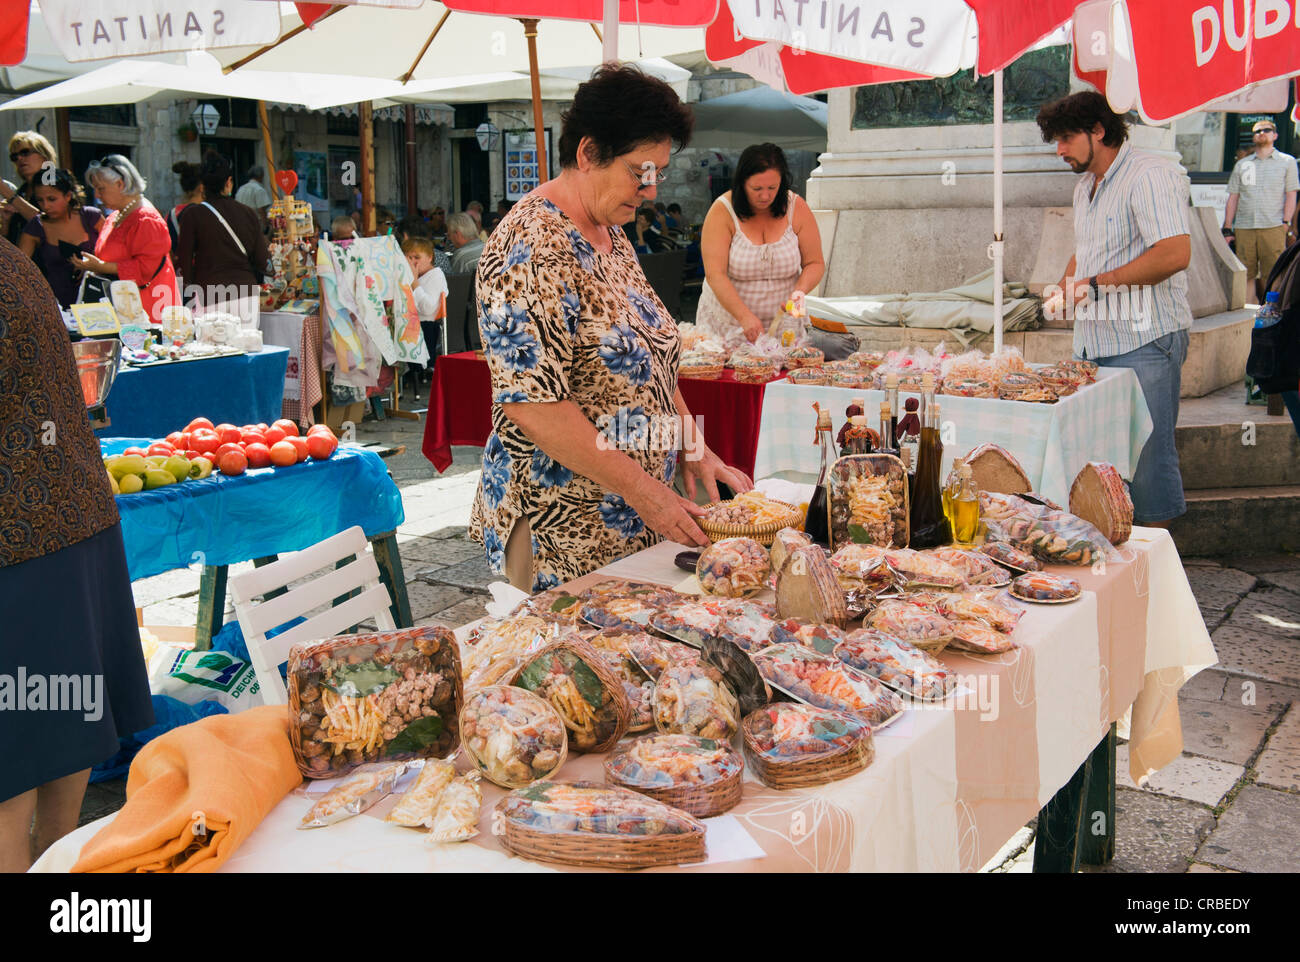 Traders at an outdoor market, Dubrovnik, Dalmatia, Croatia, Europe Stock Photo